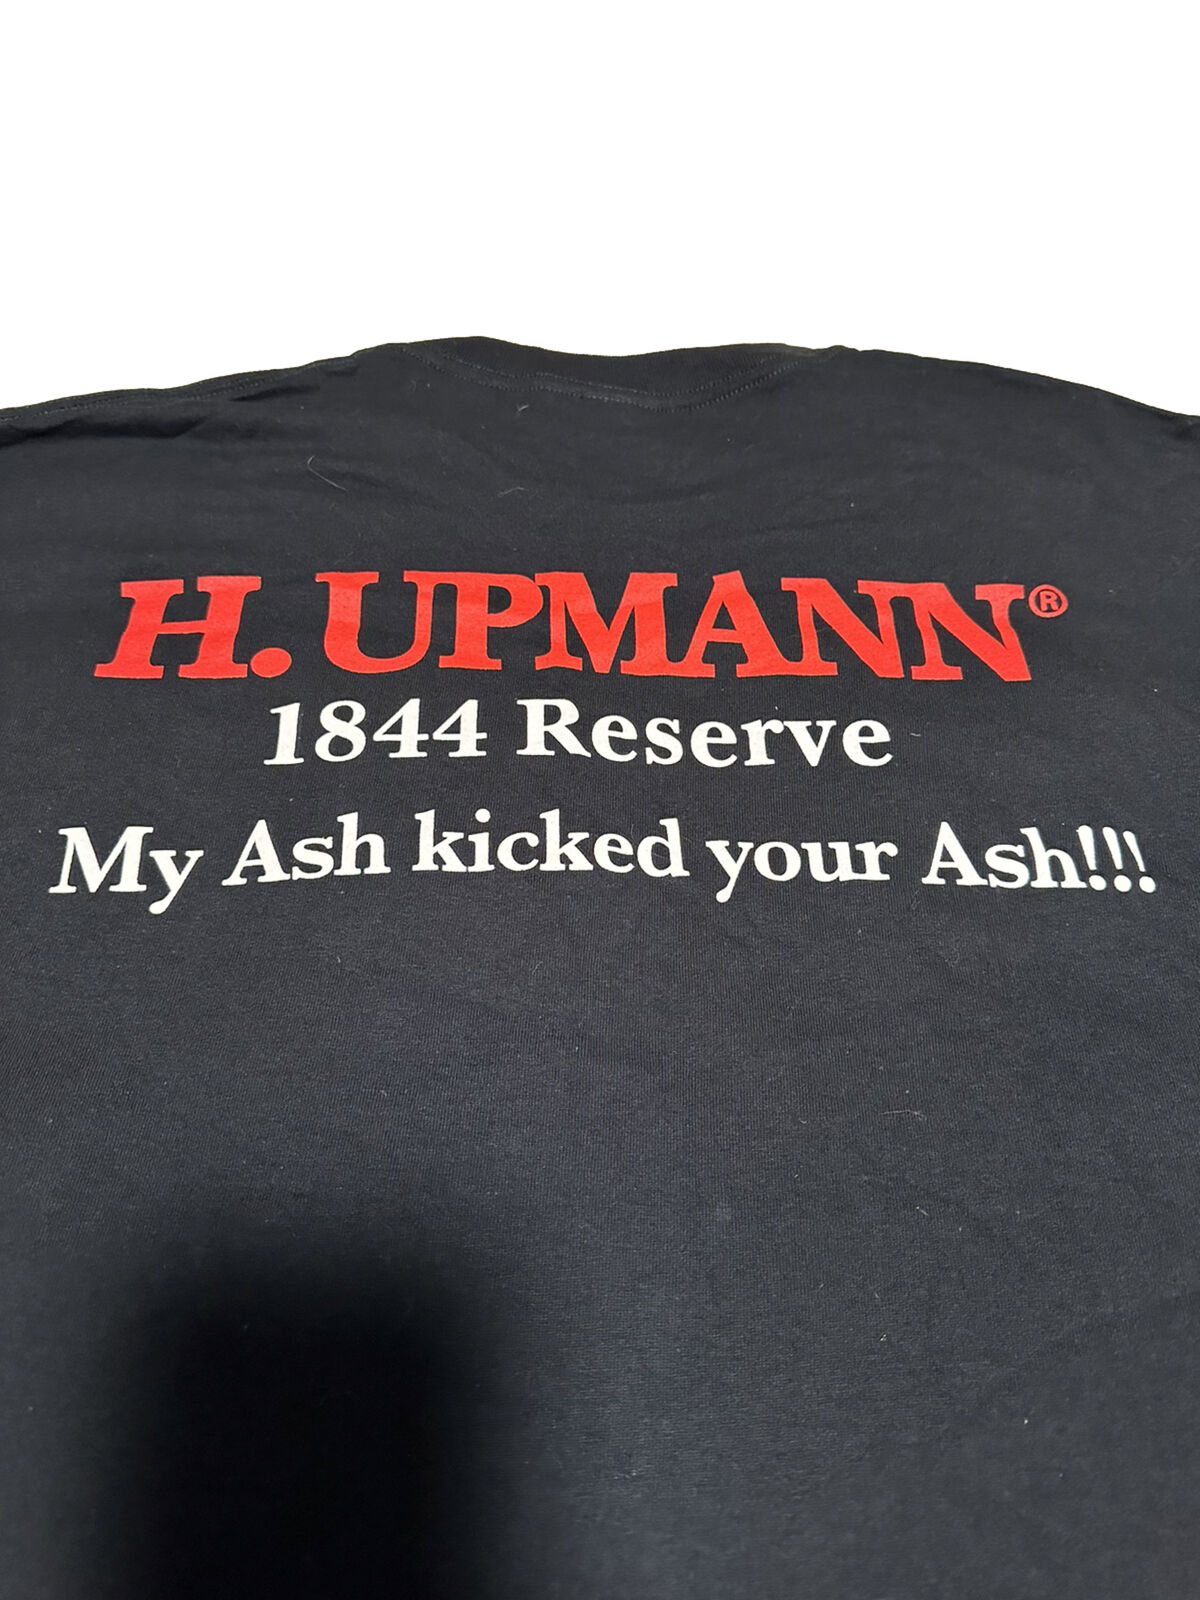 My Ash Kicked Your Ash Vintage H. Upmann Reserve cigar T-Shirt- XL - Never worn